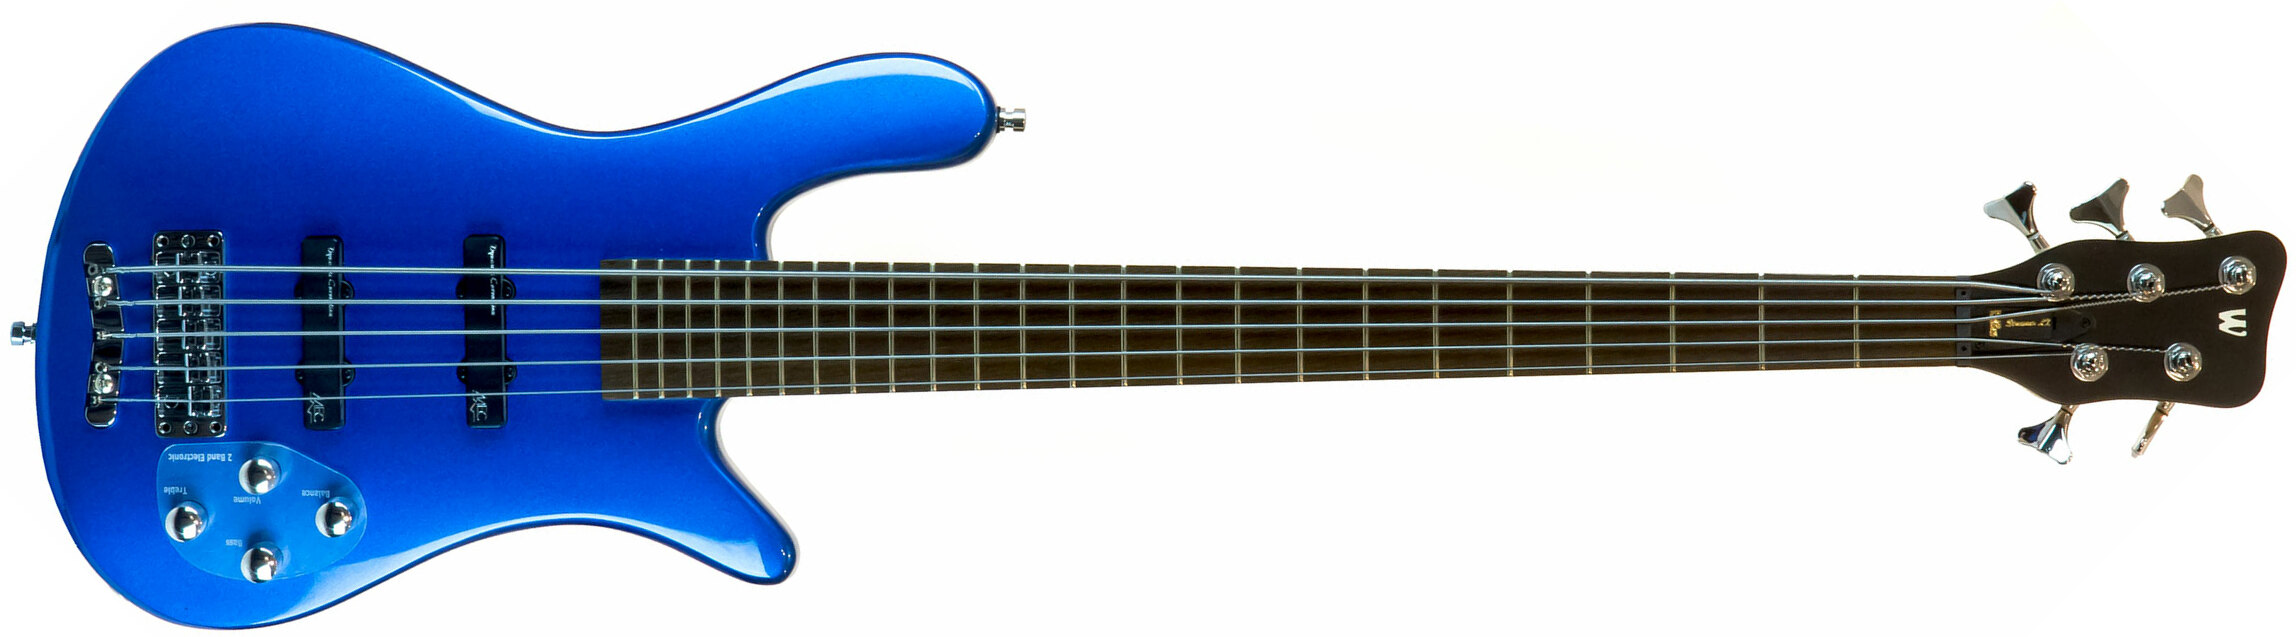 Warwick Streamer Lx 5 String Rockbass 5-cordes Active Wen +housse - Blue Metallic - Bajo eléctrico de cuerpo sólido - Main picture